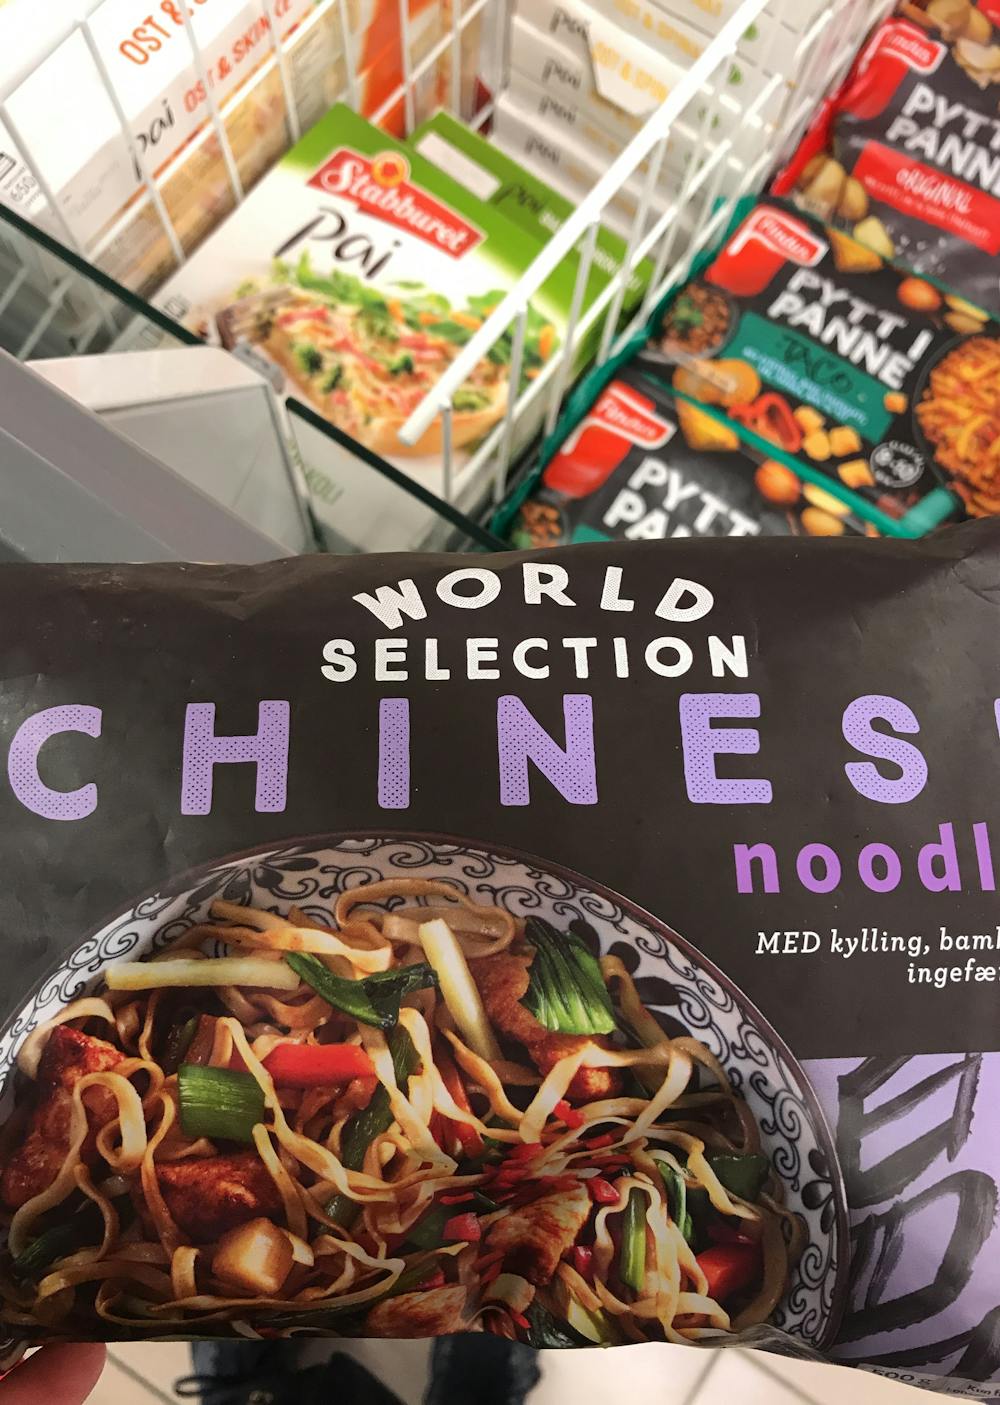 Chinese noodles med kylling, bambus & ingefær, World selection